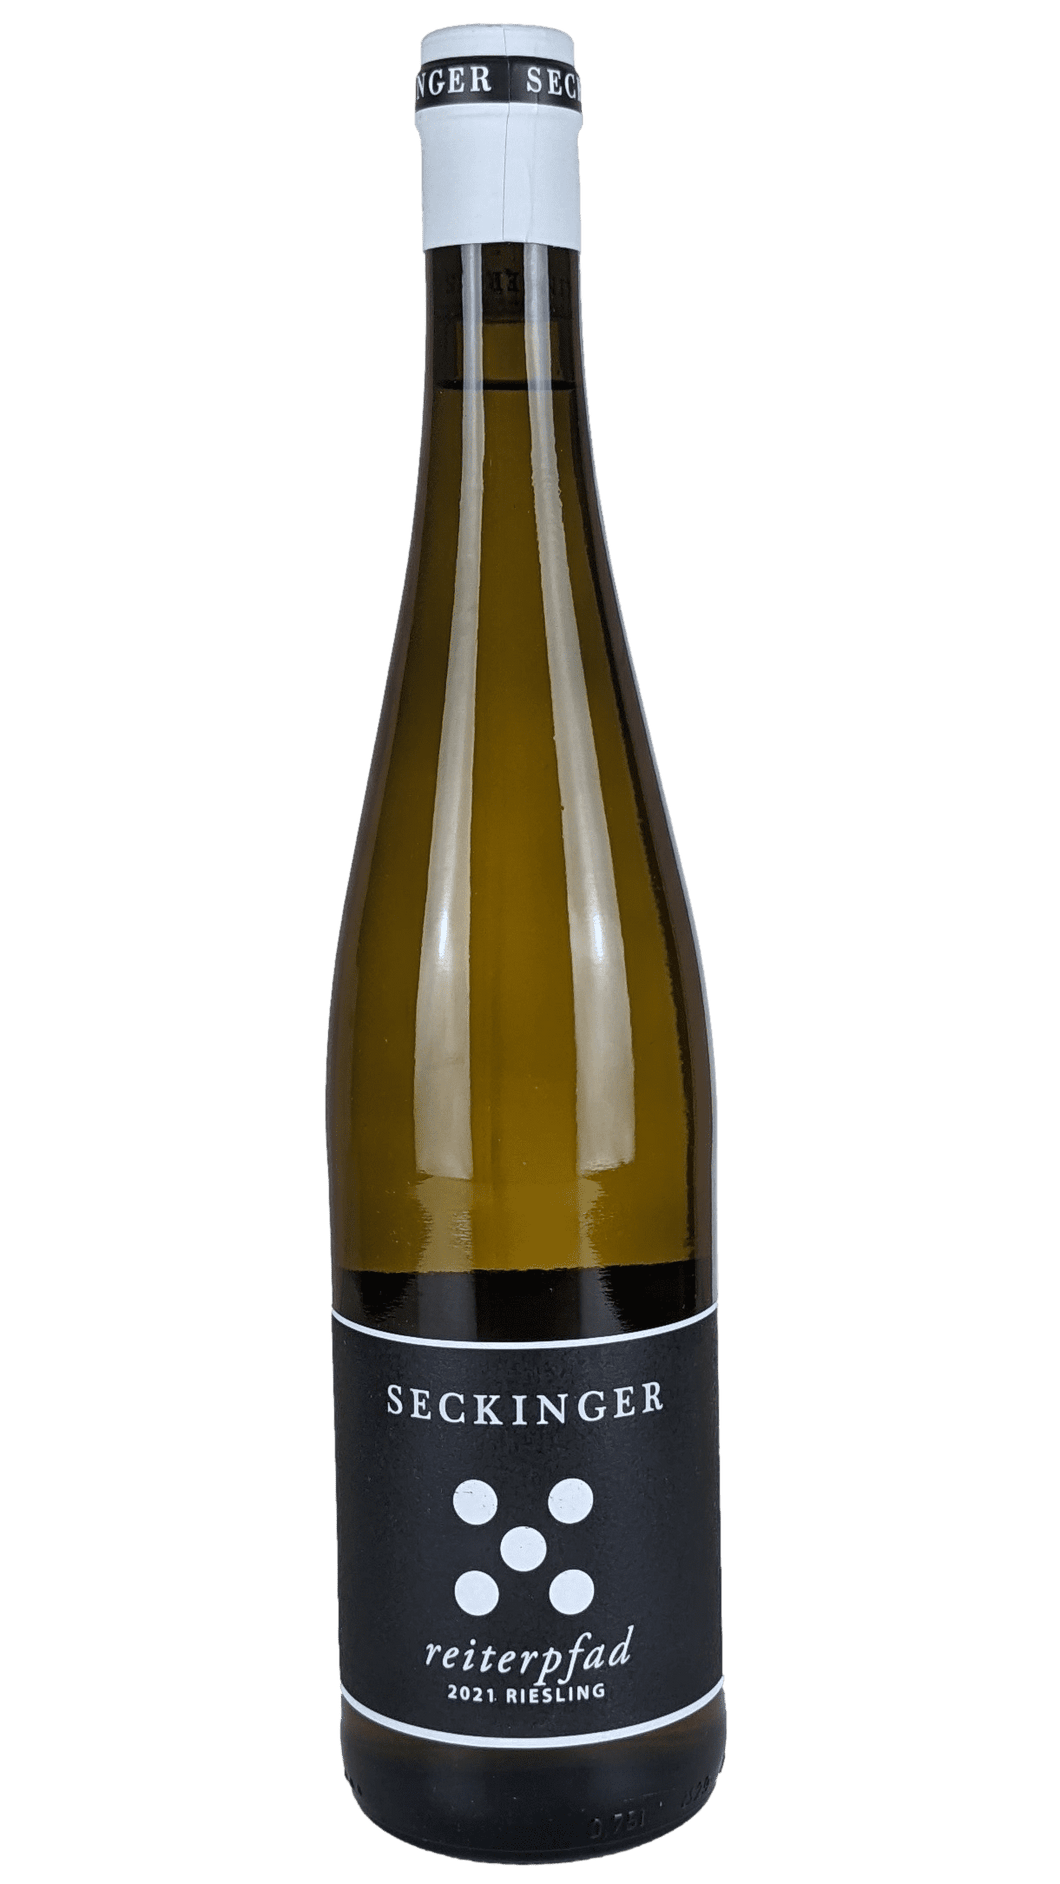 Seckinger - Riesling Reiterpfad 2021